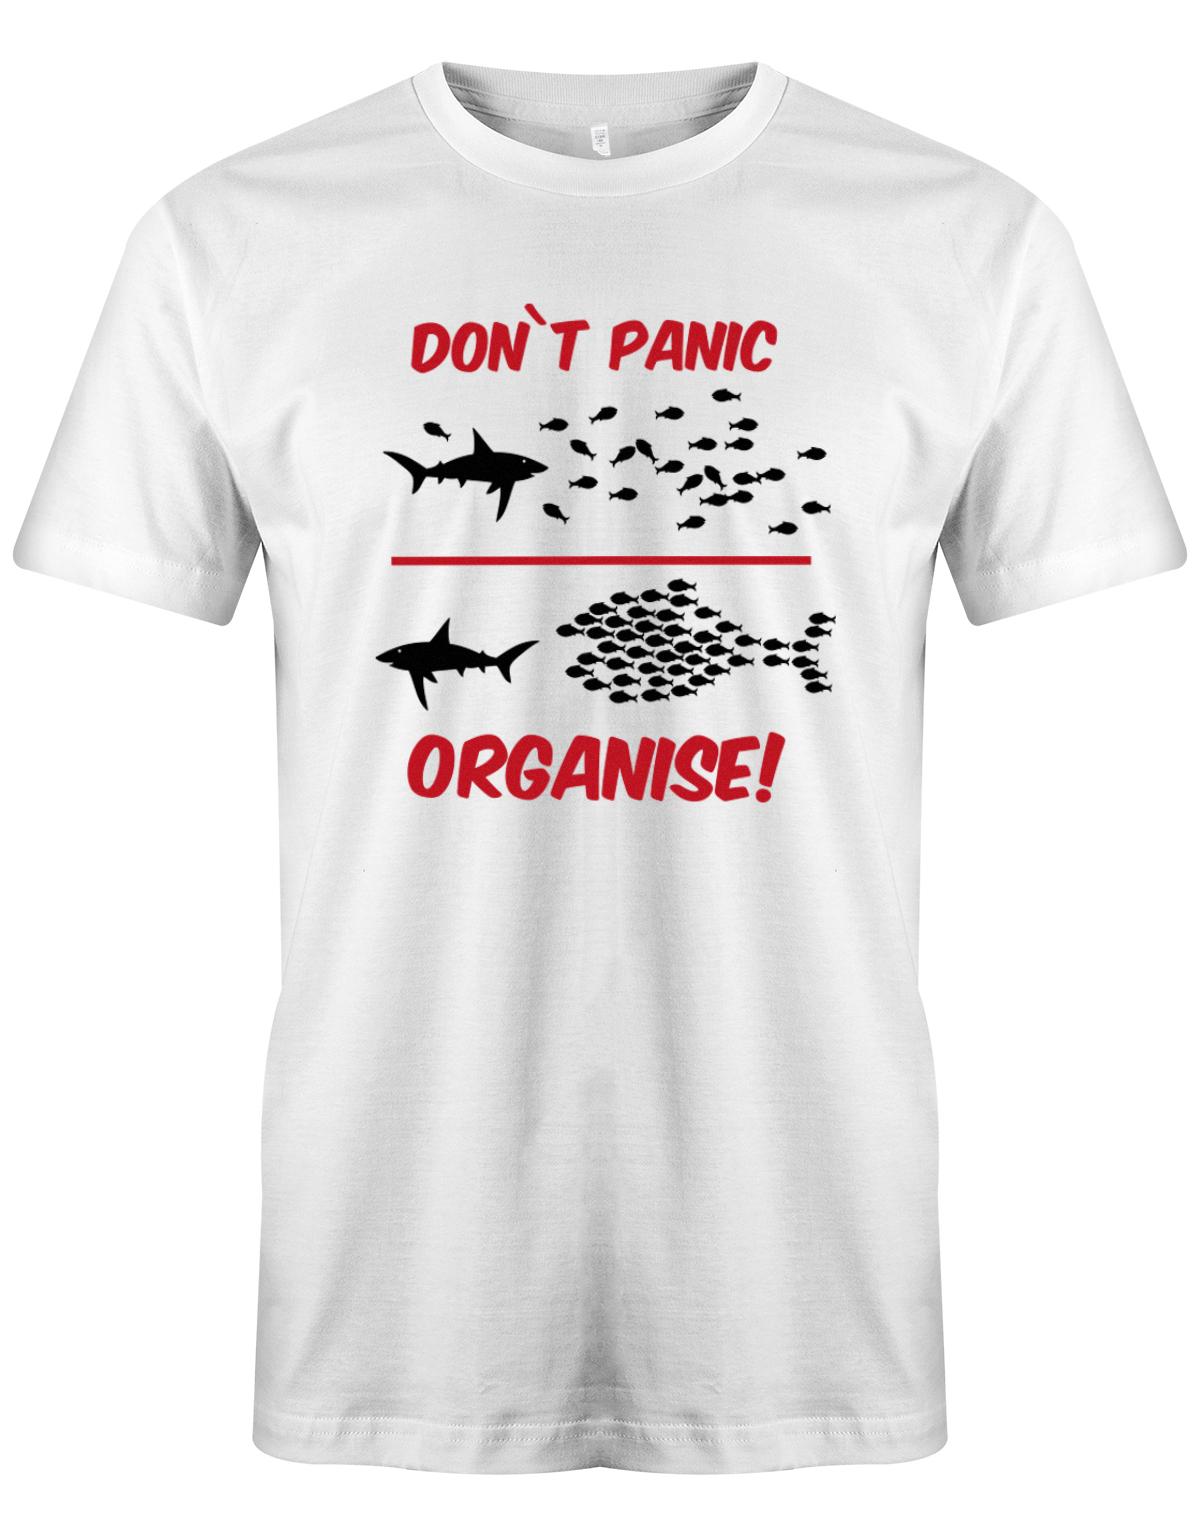 Dont-Panic-Organise-Herreen-Shirt-Weiss